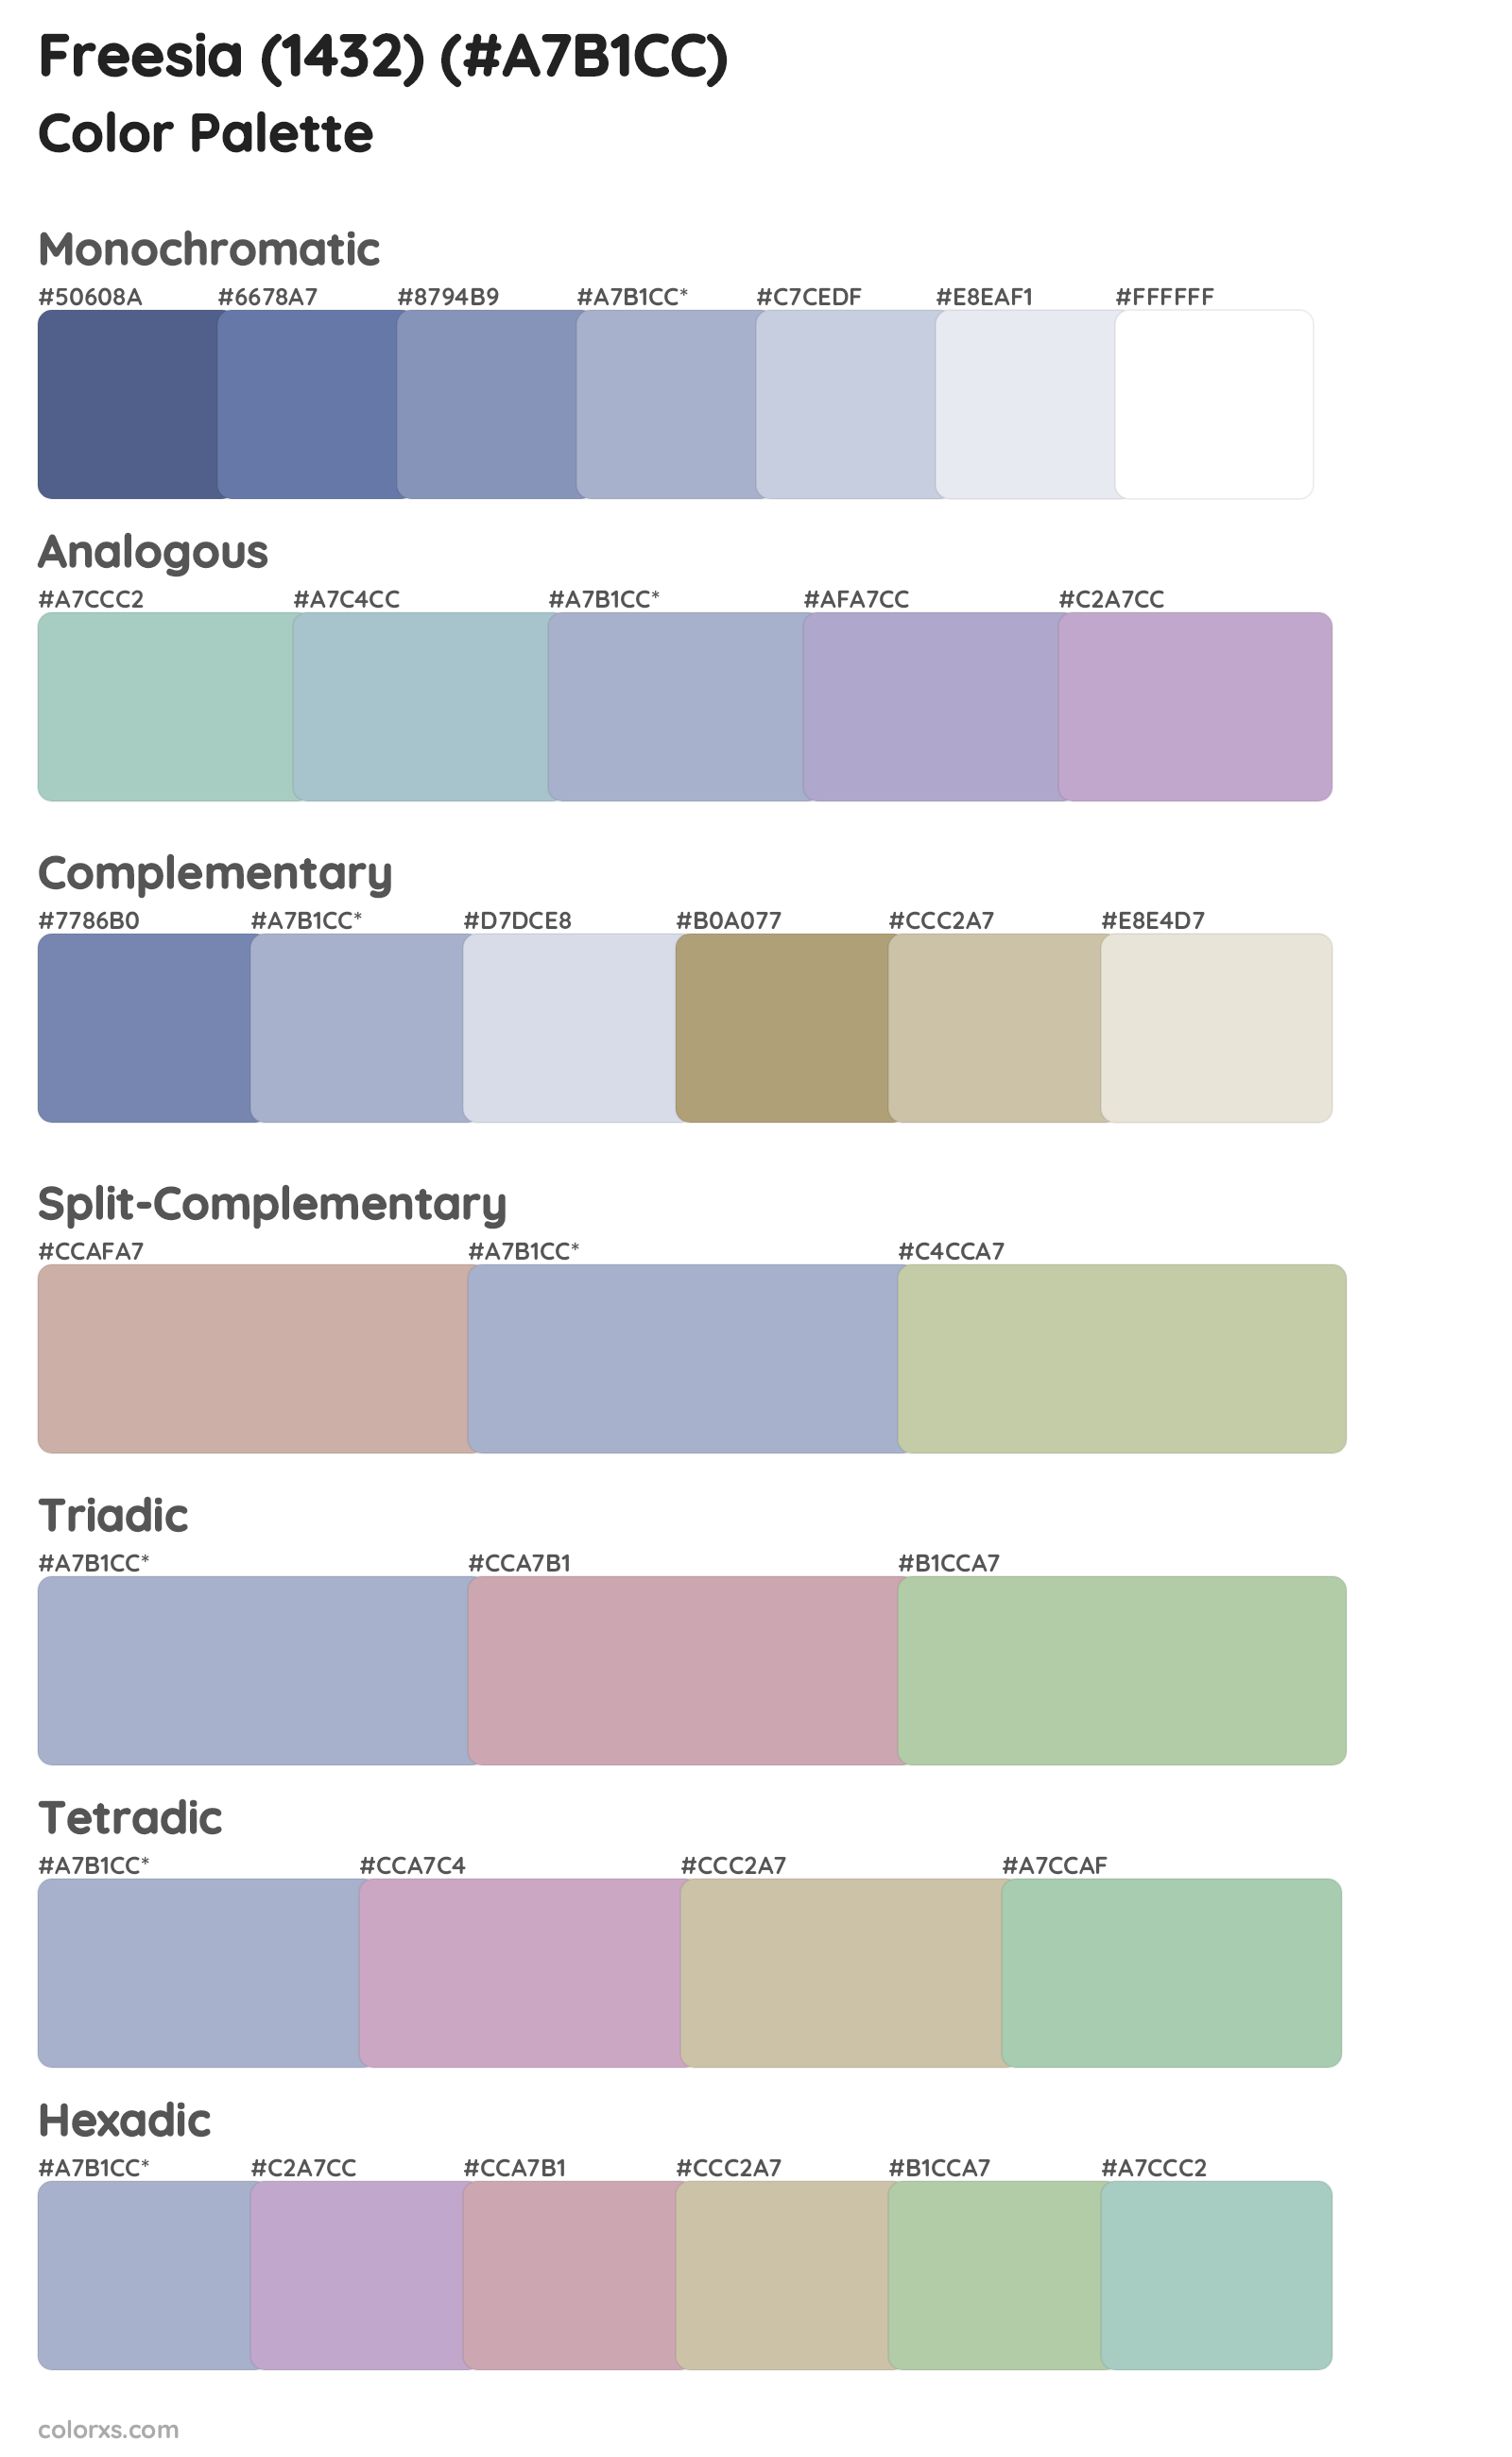 Freesia (1432) Color Scheme Palettes